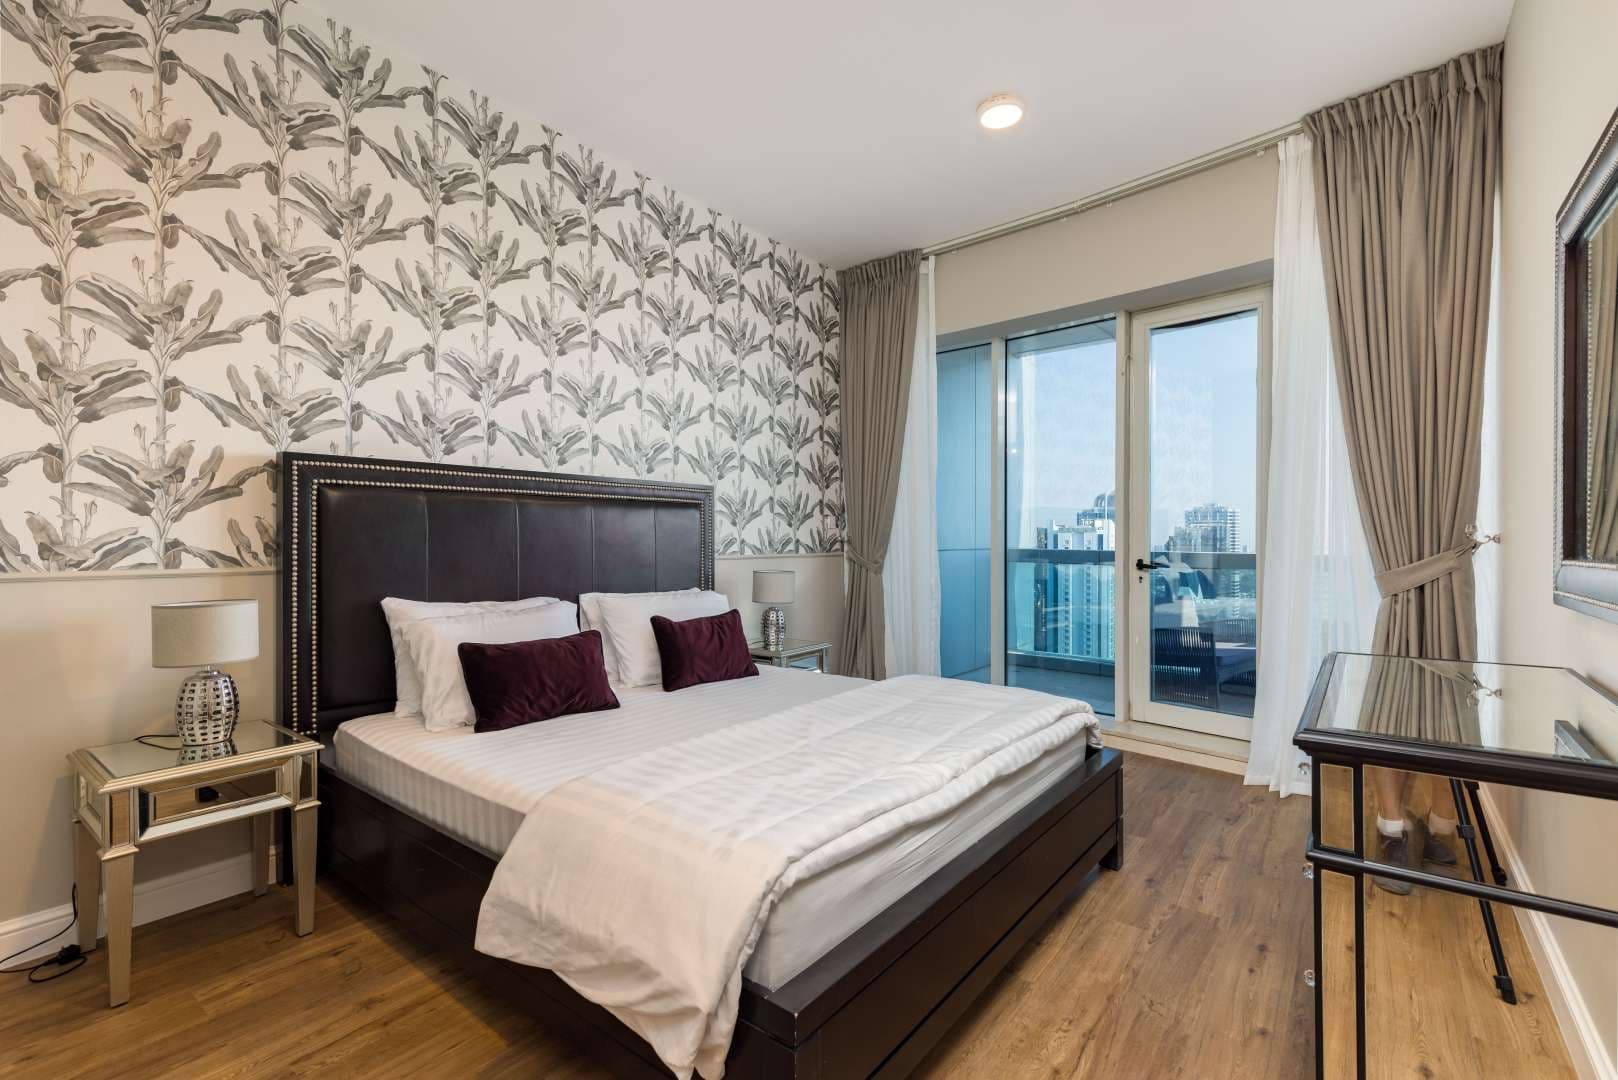 4 Bedroom Apartment For Rent Horizon Tower Lp09731 8aee85d79f53b80.jpg